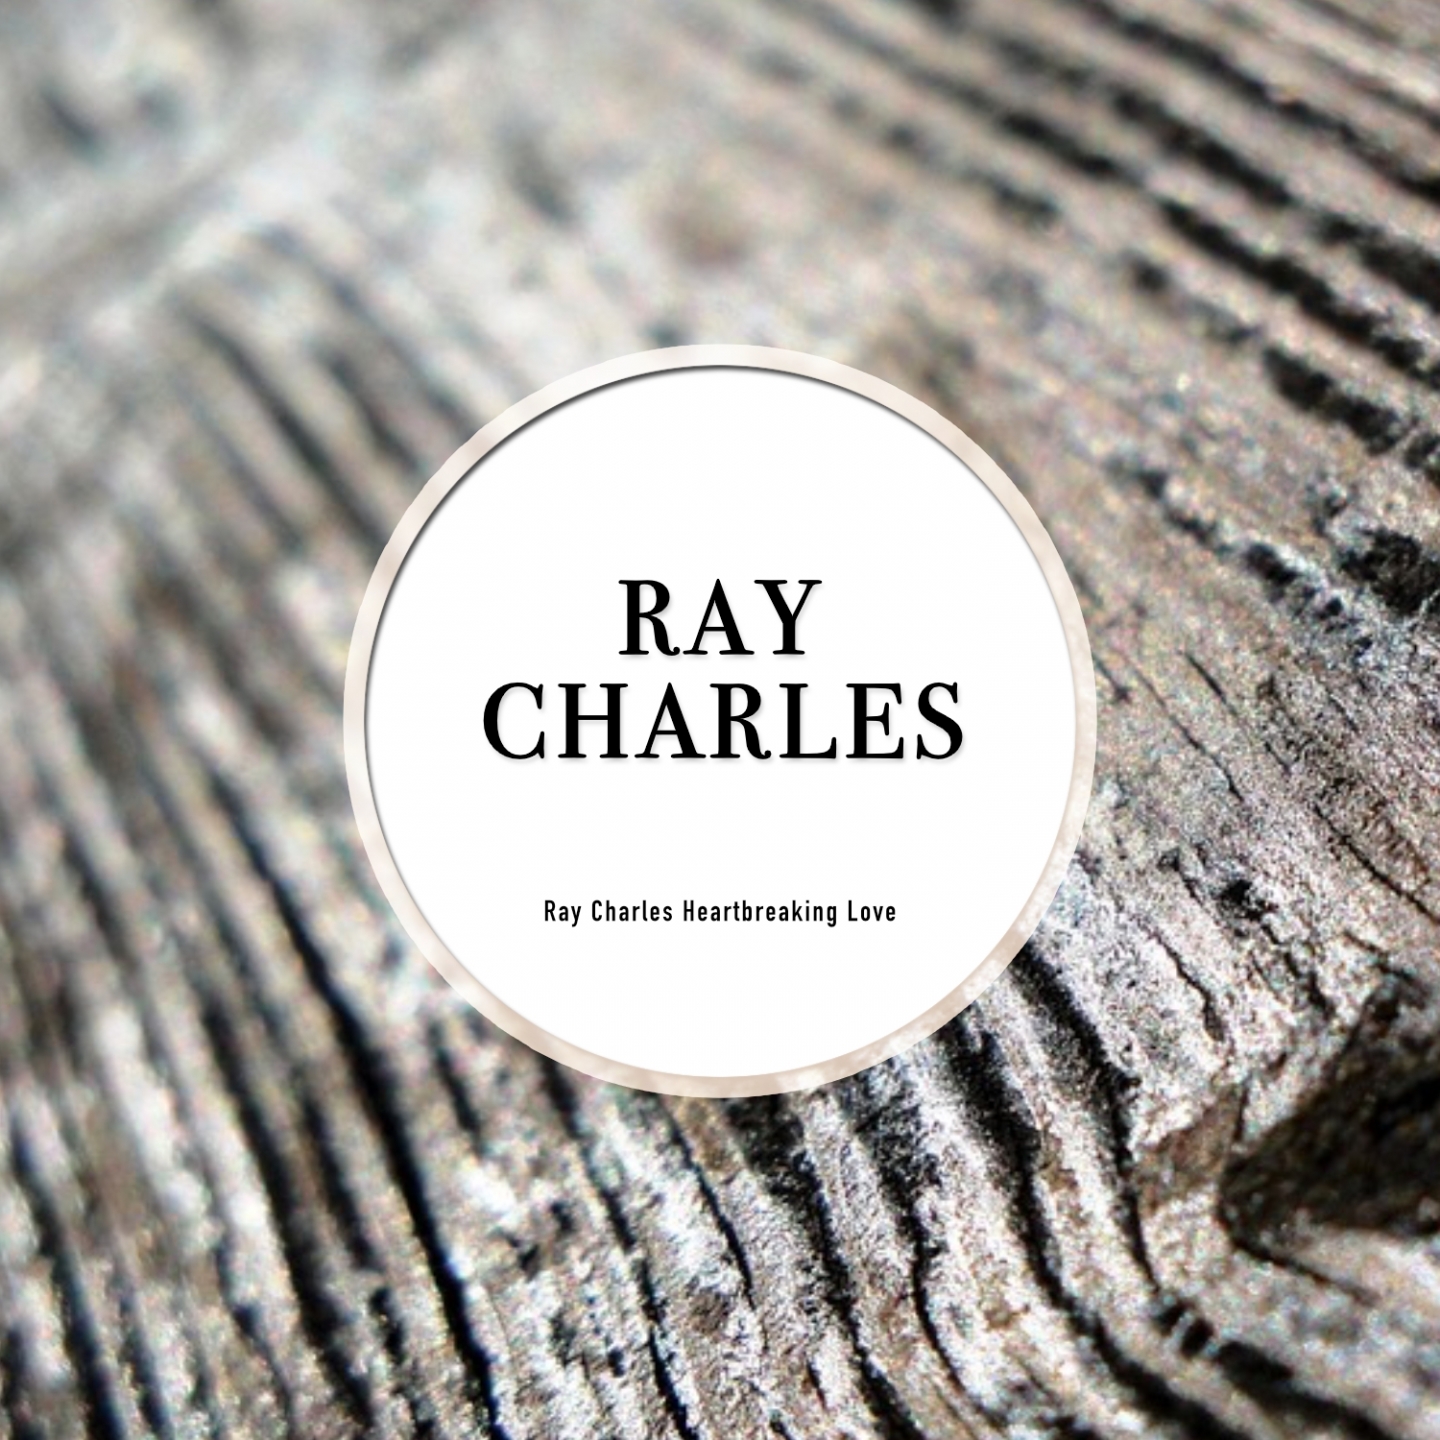 Ray Charles Heartbreaking Love